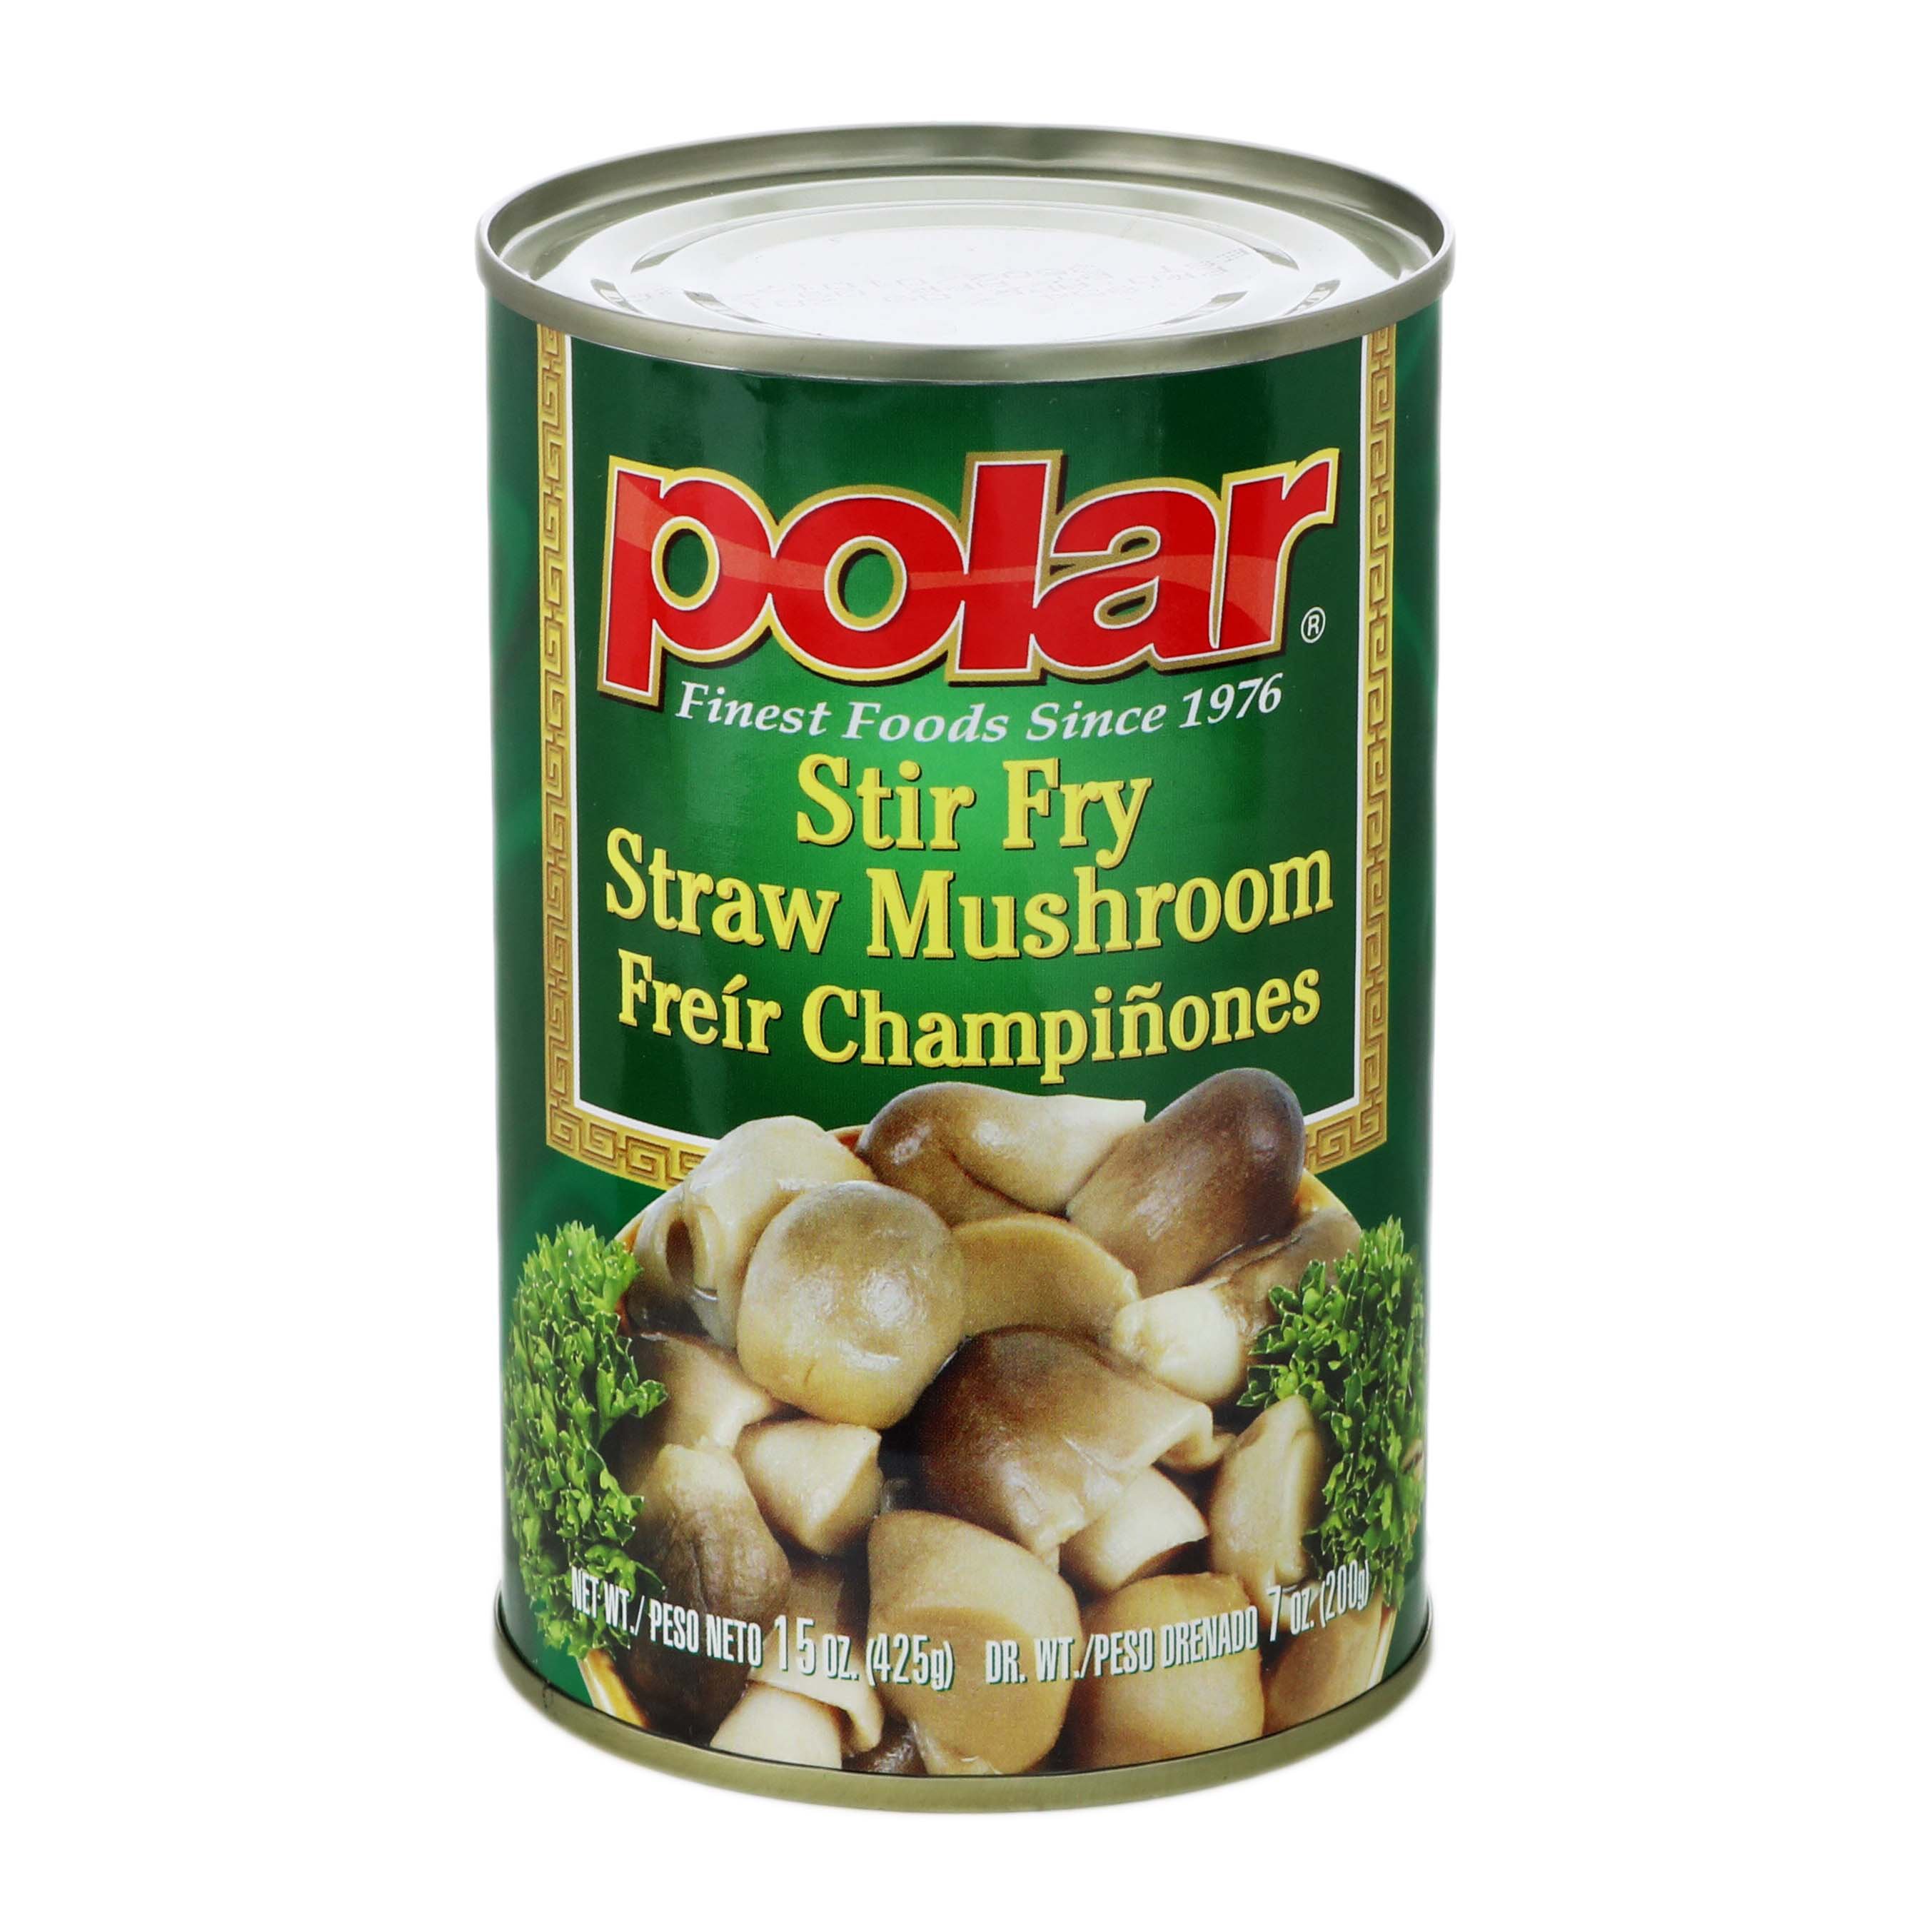 Polar Stir Fry Straw Mushrooms